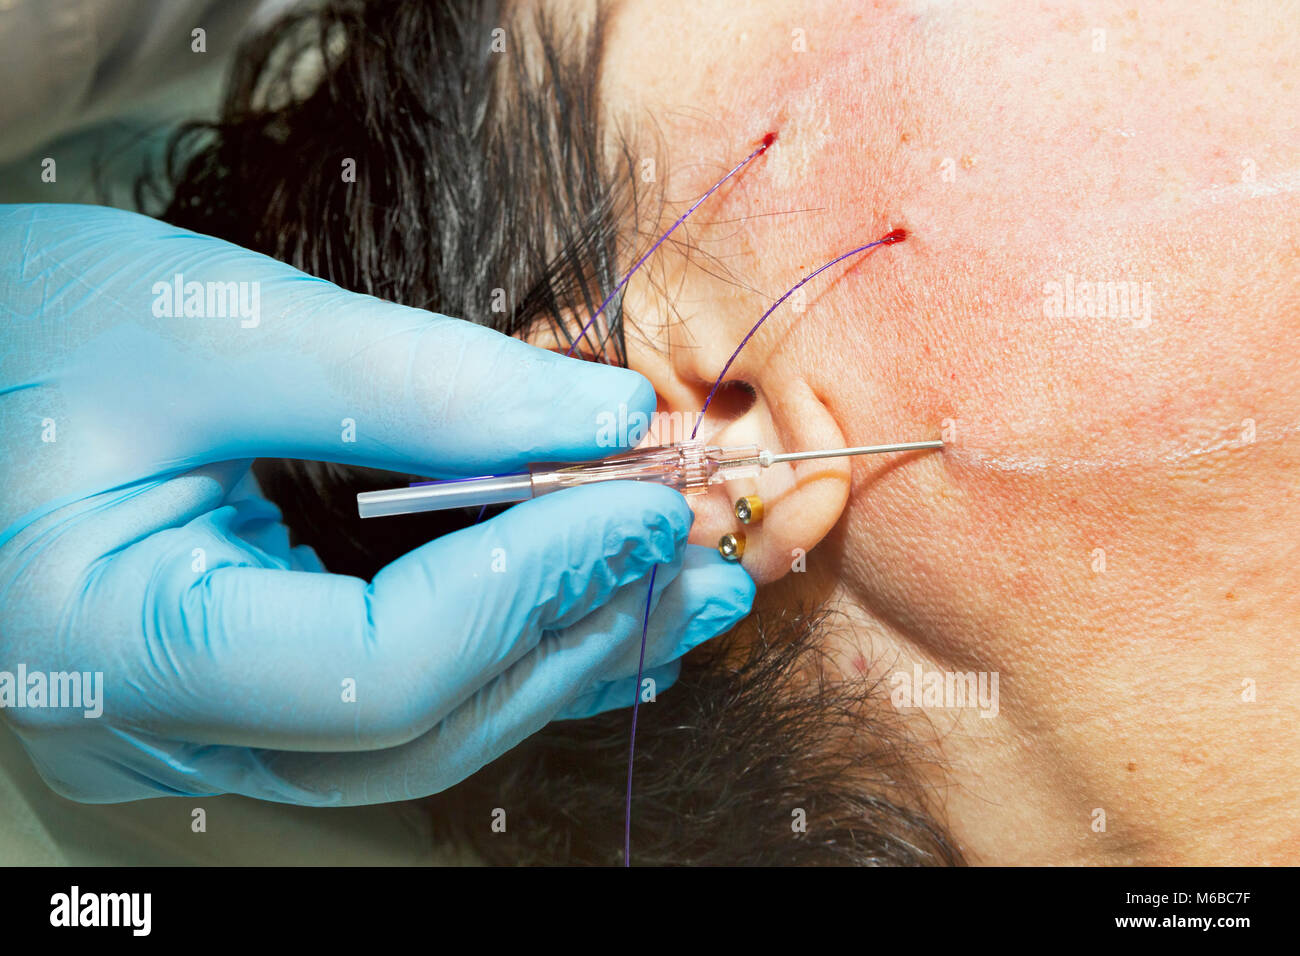 Dermatologist surgeon inserts polylactic acid filaments to perform facial lifting - Selective focus Stock Photo